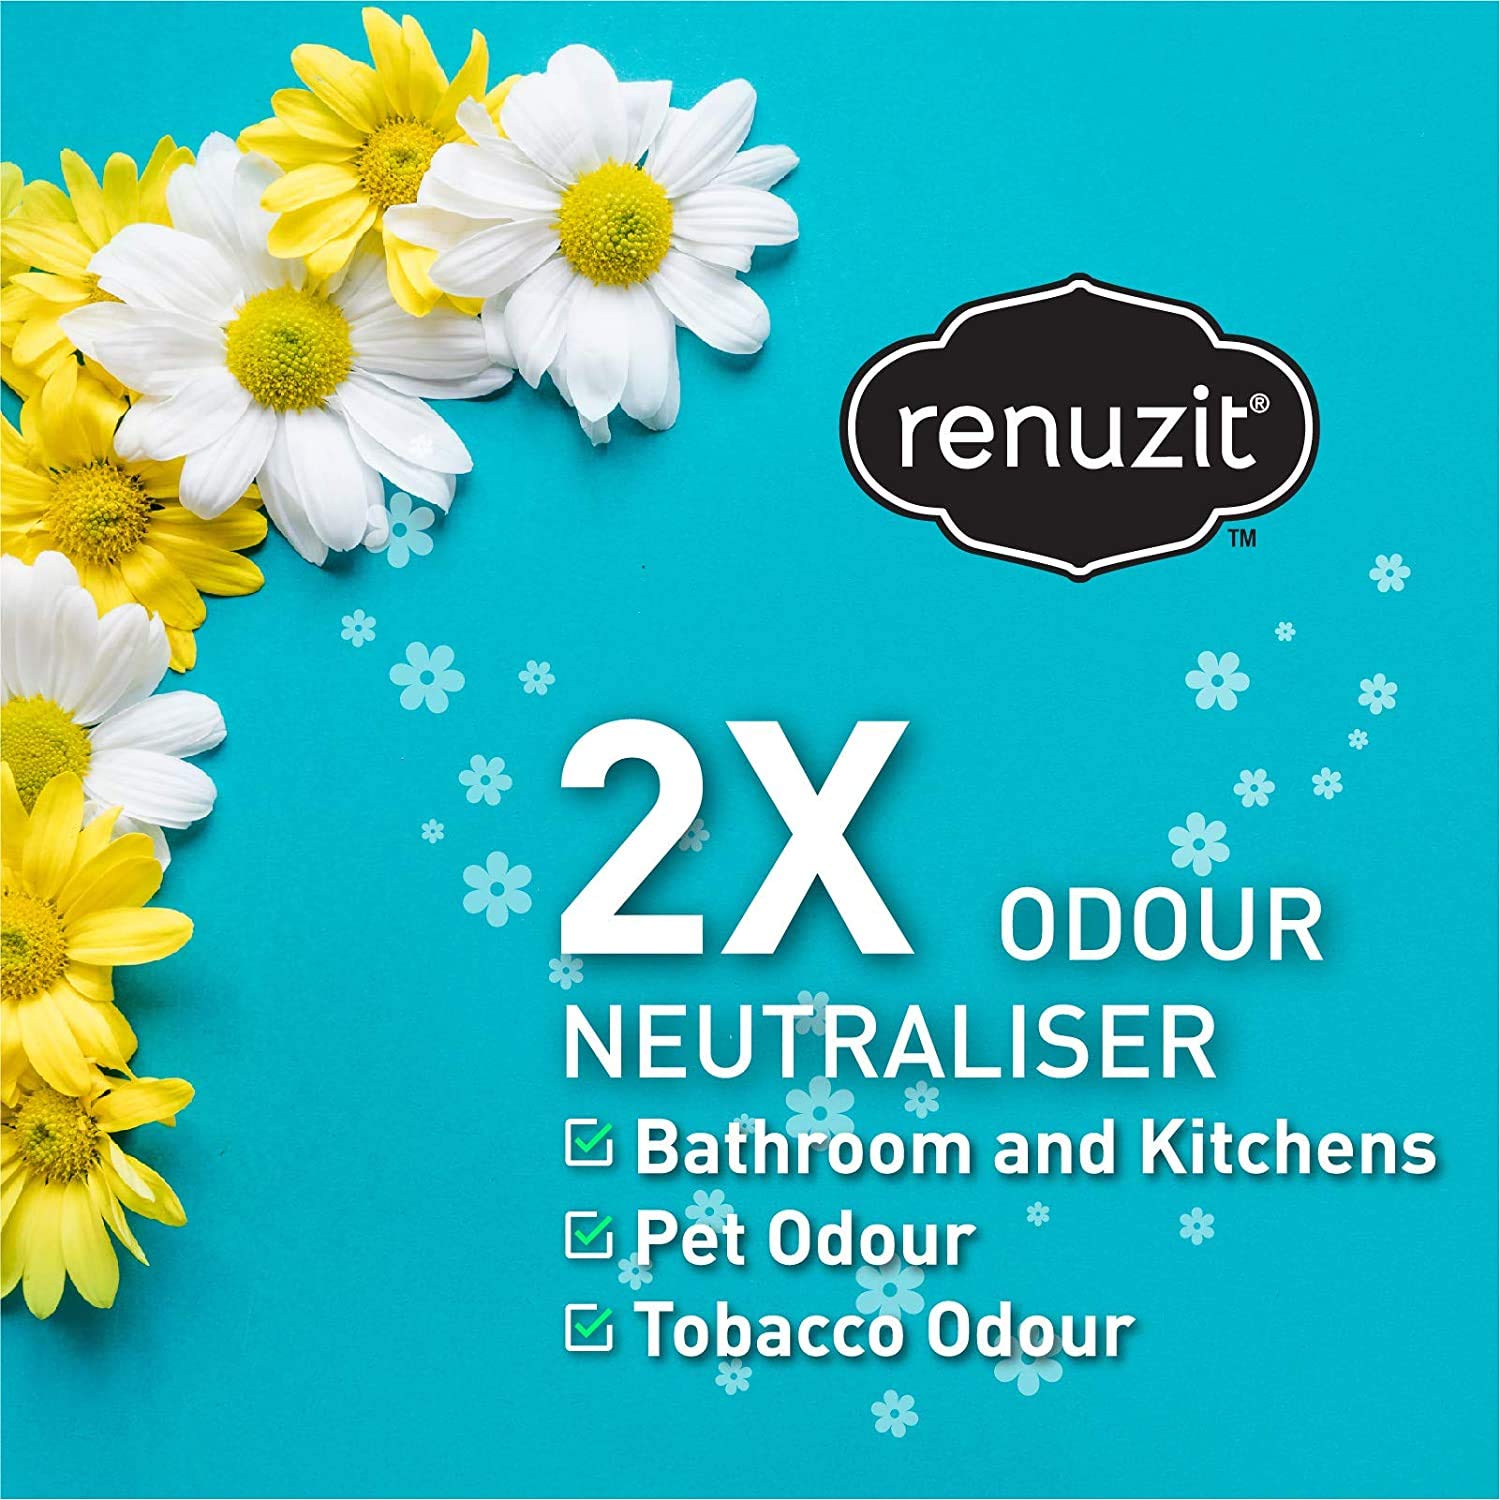 Renuzit Gel Air Freshener, Pure Breeze, 3 Pack, 4 Count, 12 Total Air Fresheners